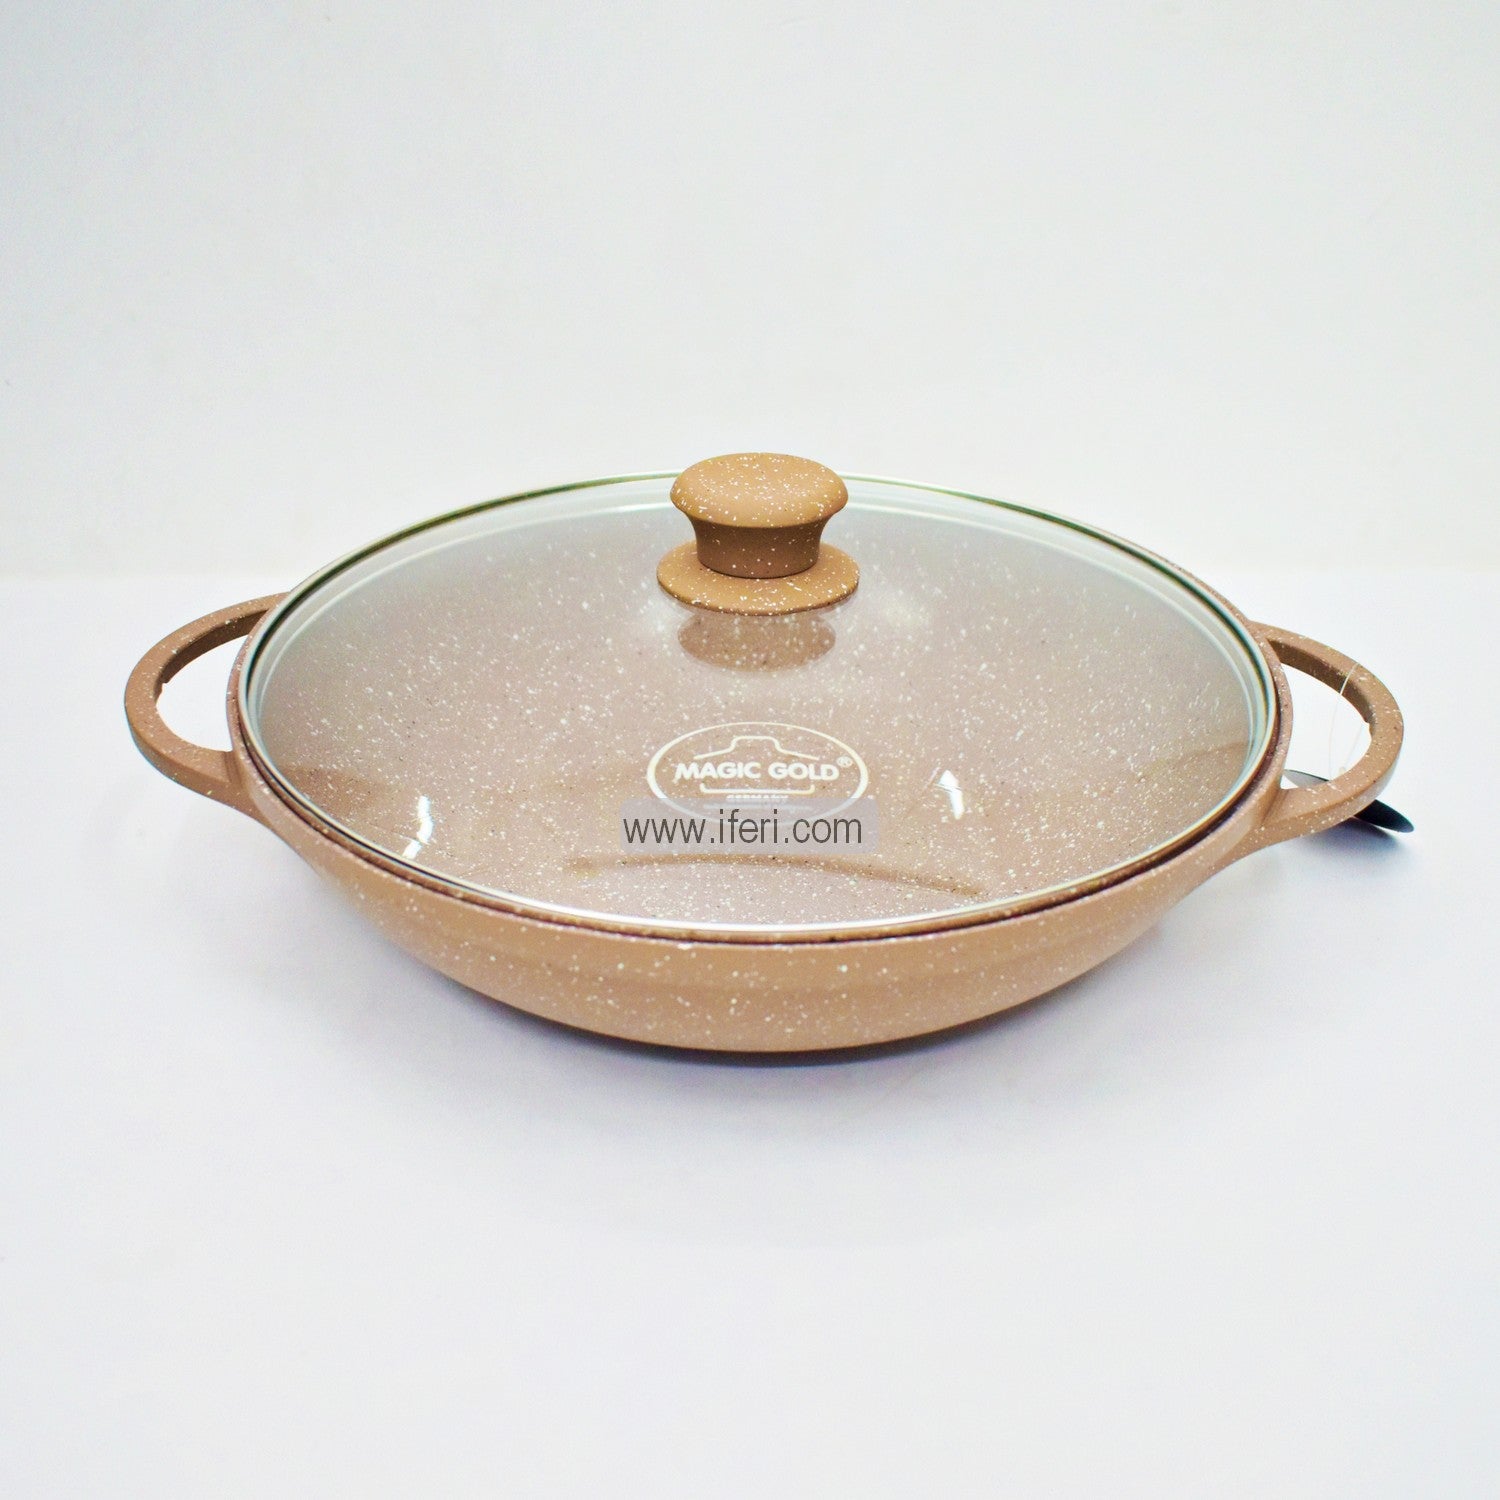 36cm Magic Gold Non-stick Cookware / Kadai with Lid TG1513